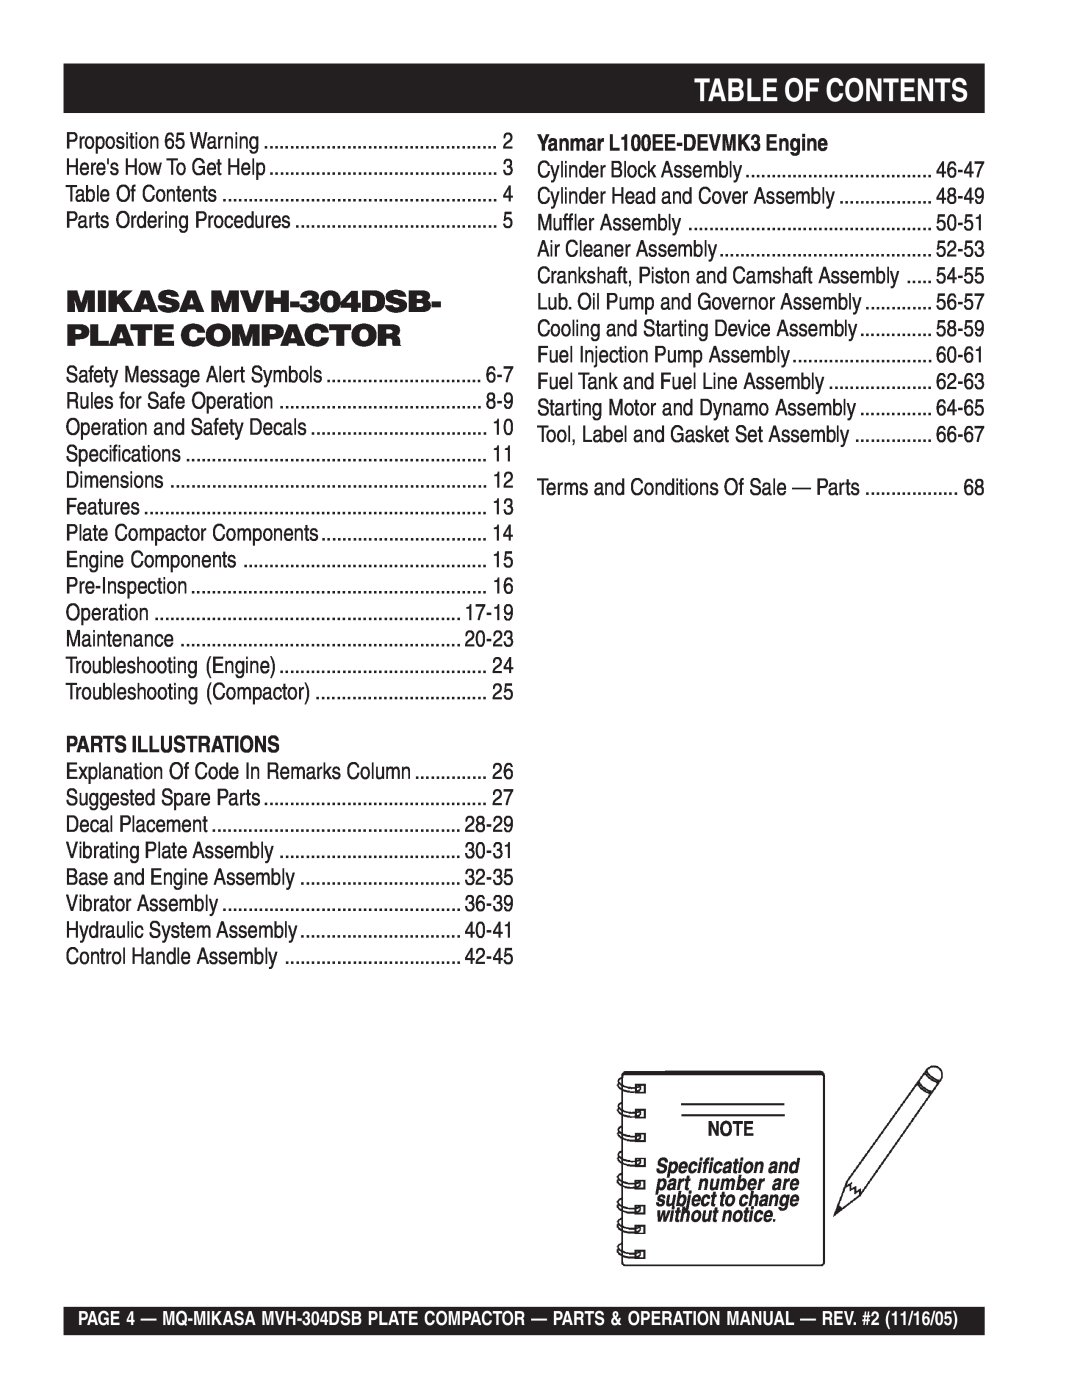 Multiquip Table Of Contents, MIKASA MVH-304DSB, Plate Compactor, Parts Illustrations, Yanmar L100EE-DEVMK3 Engine 